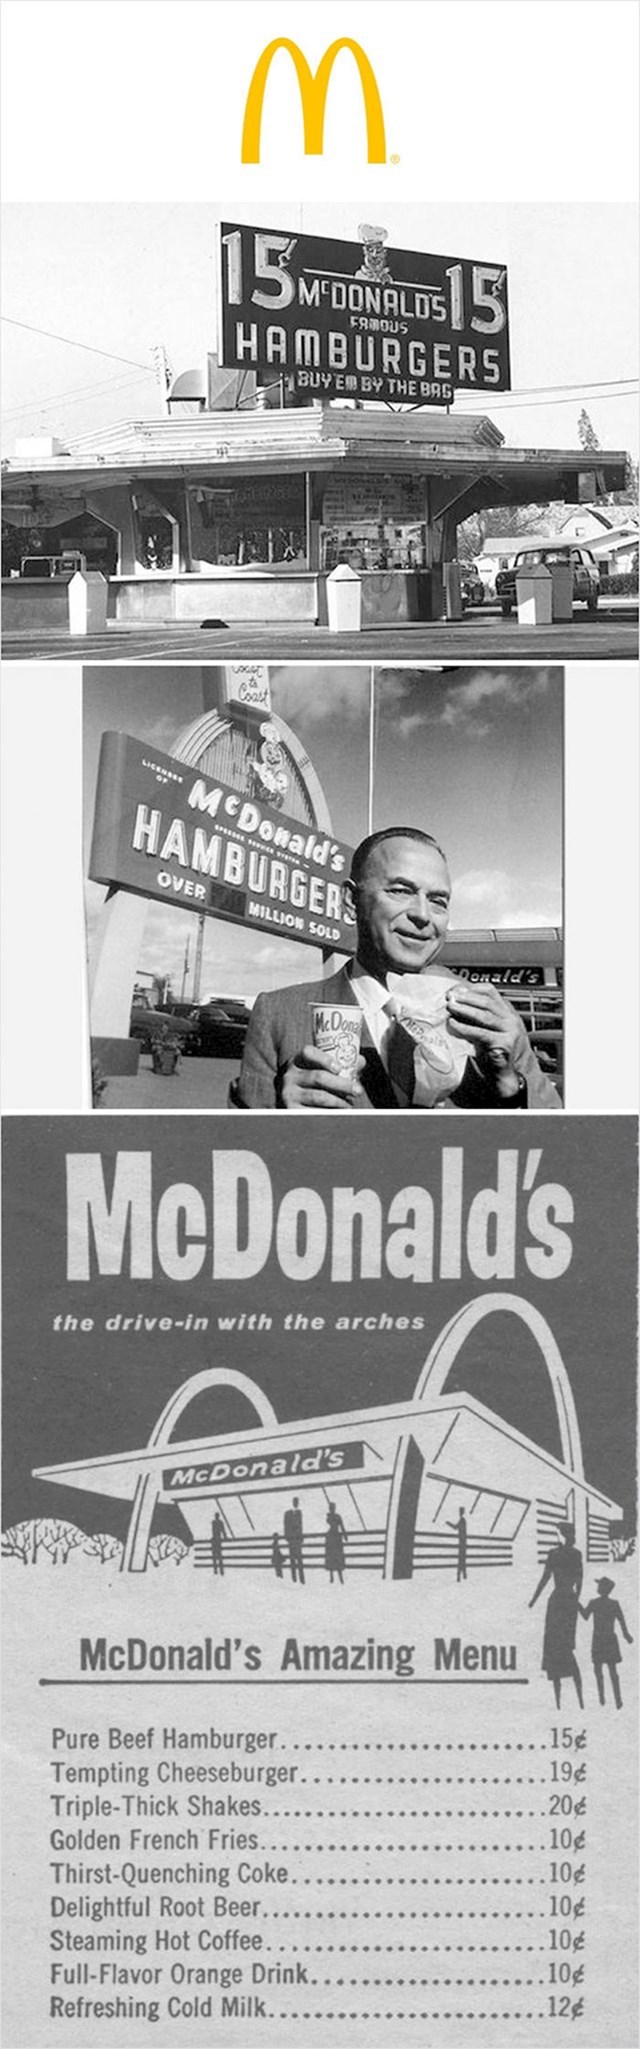 Prvi McDonald's (1955.)